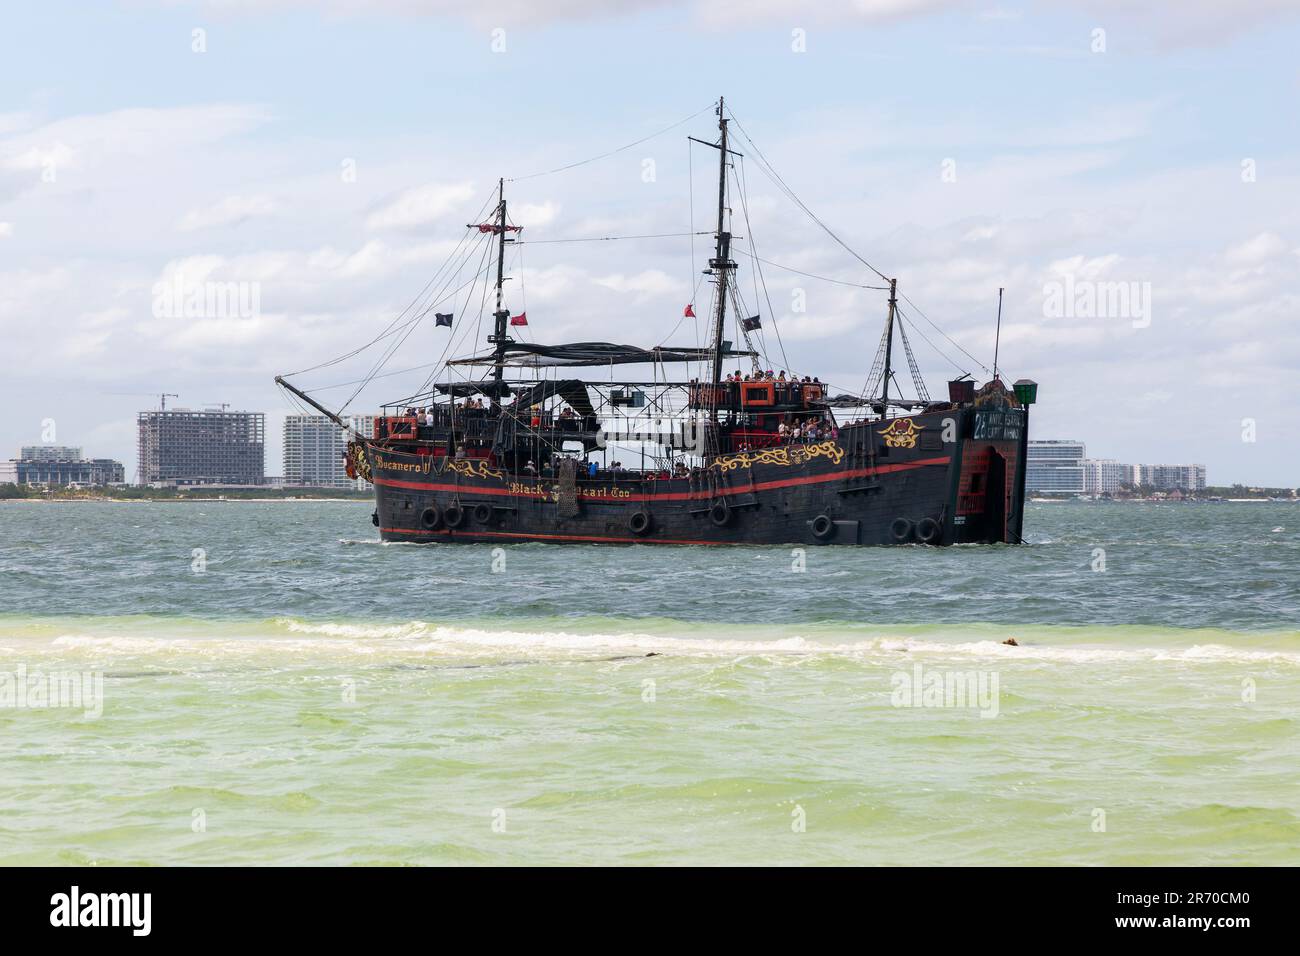 Battle on a Pirate Ship - Blog - Pirate Show Cancun, the pirate ship 